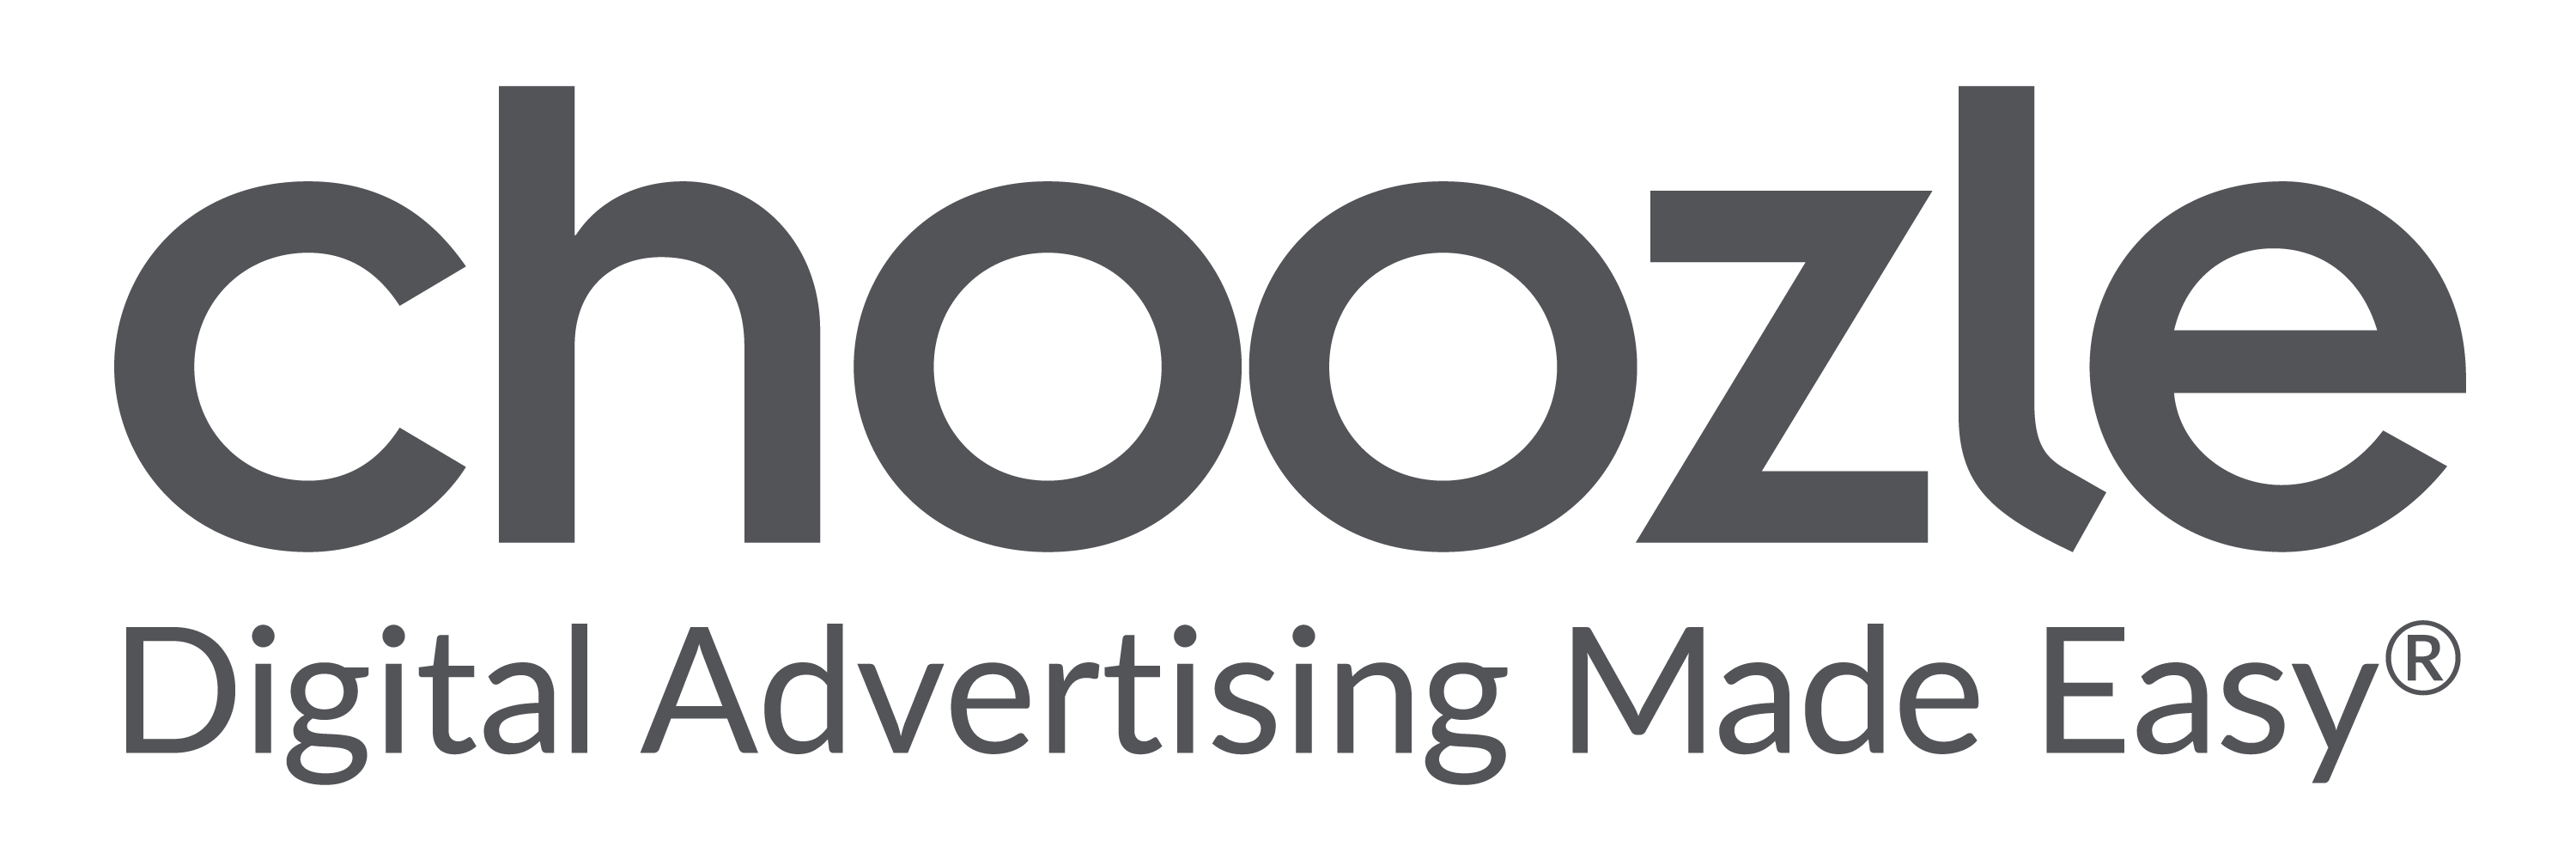 Choozle Company Logo